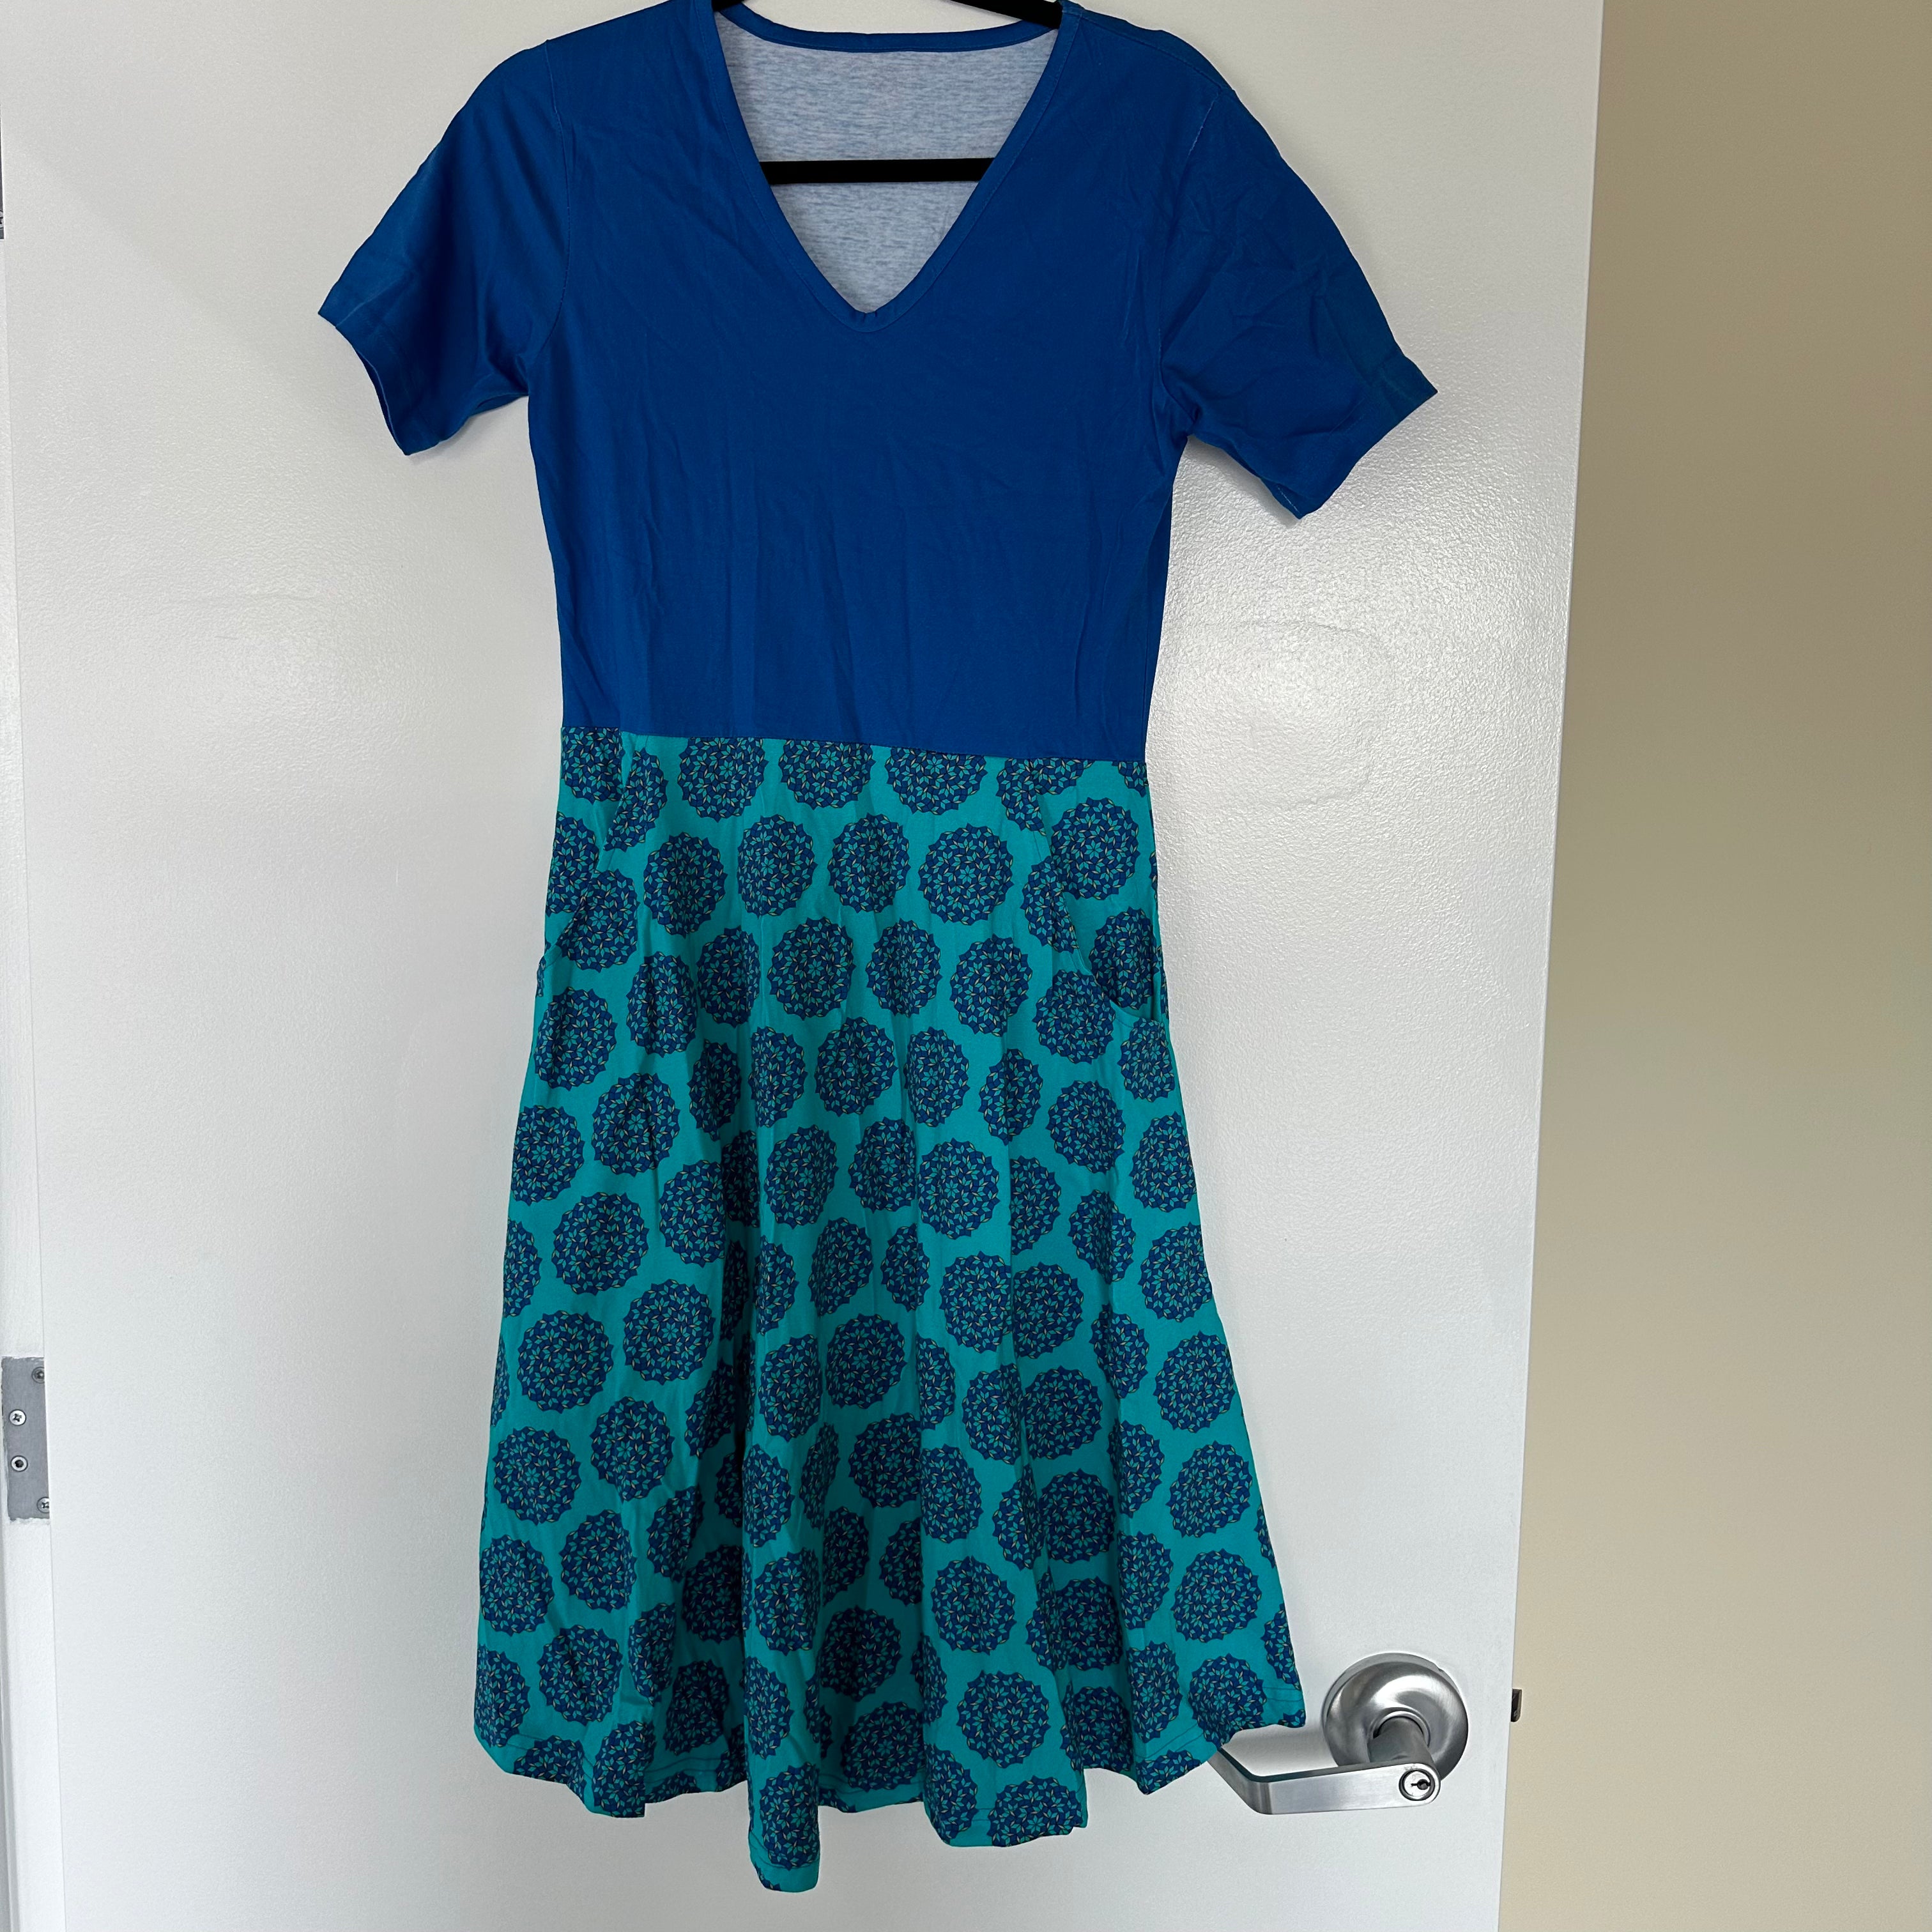 Penrose Tiling Adults Dress Sample (Cobalt Blue Top) - XS